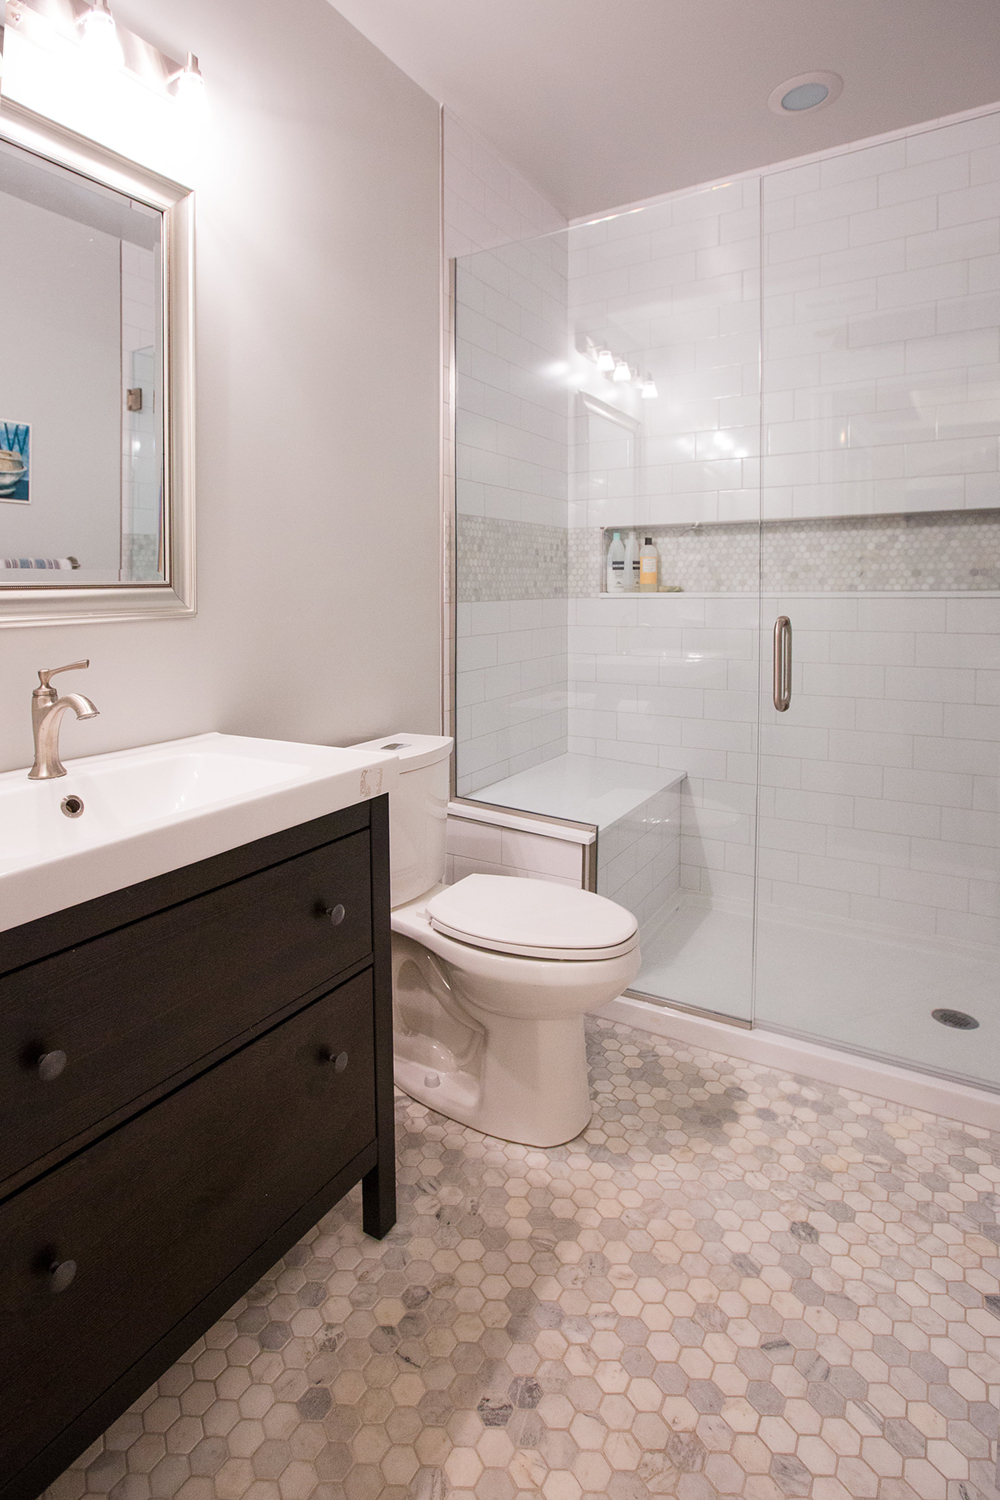 Dirr Bathroom Remodel: Shower and Toilet